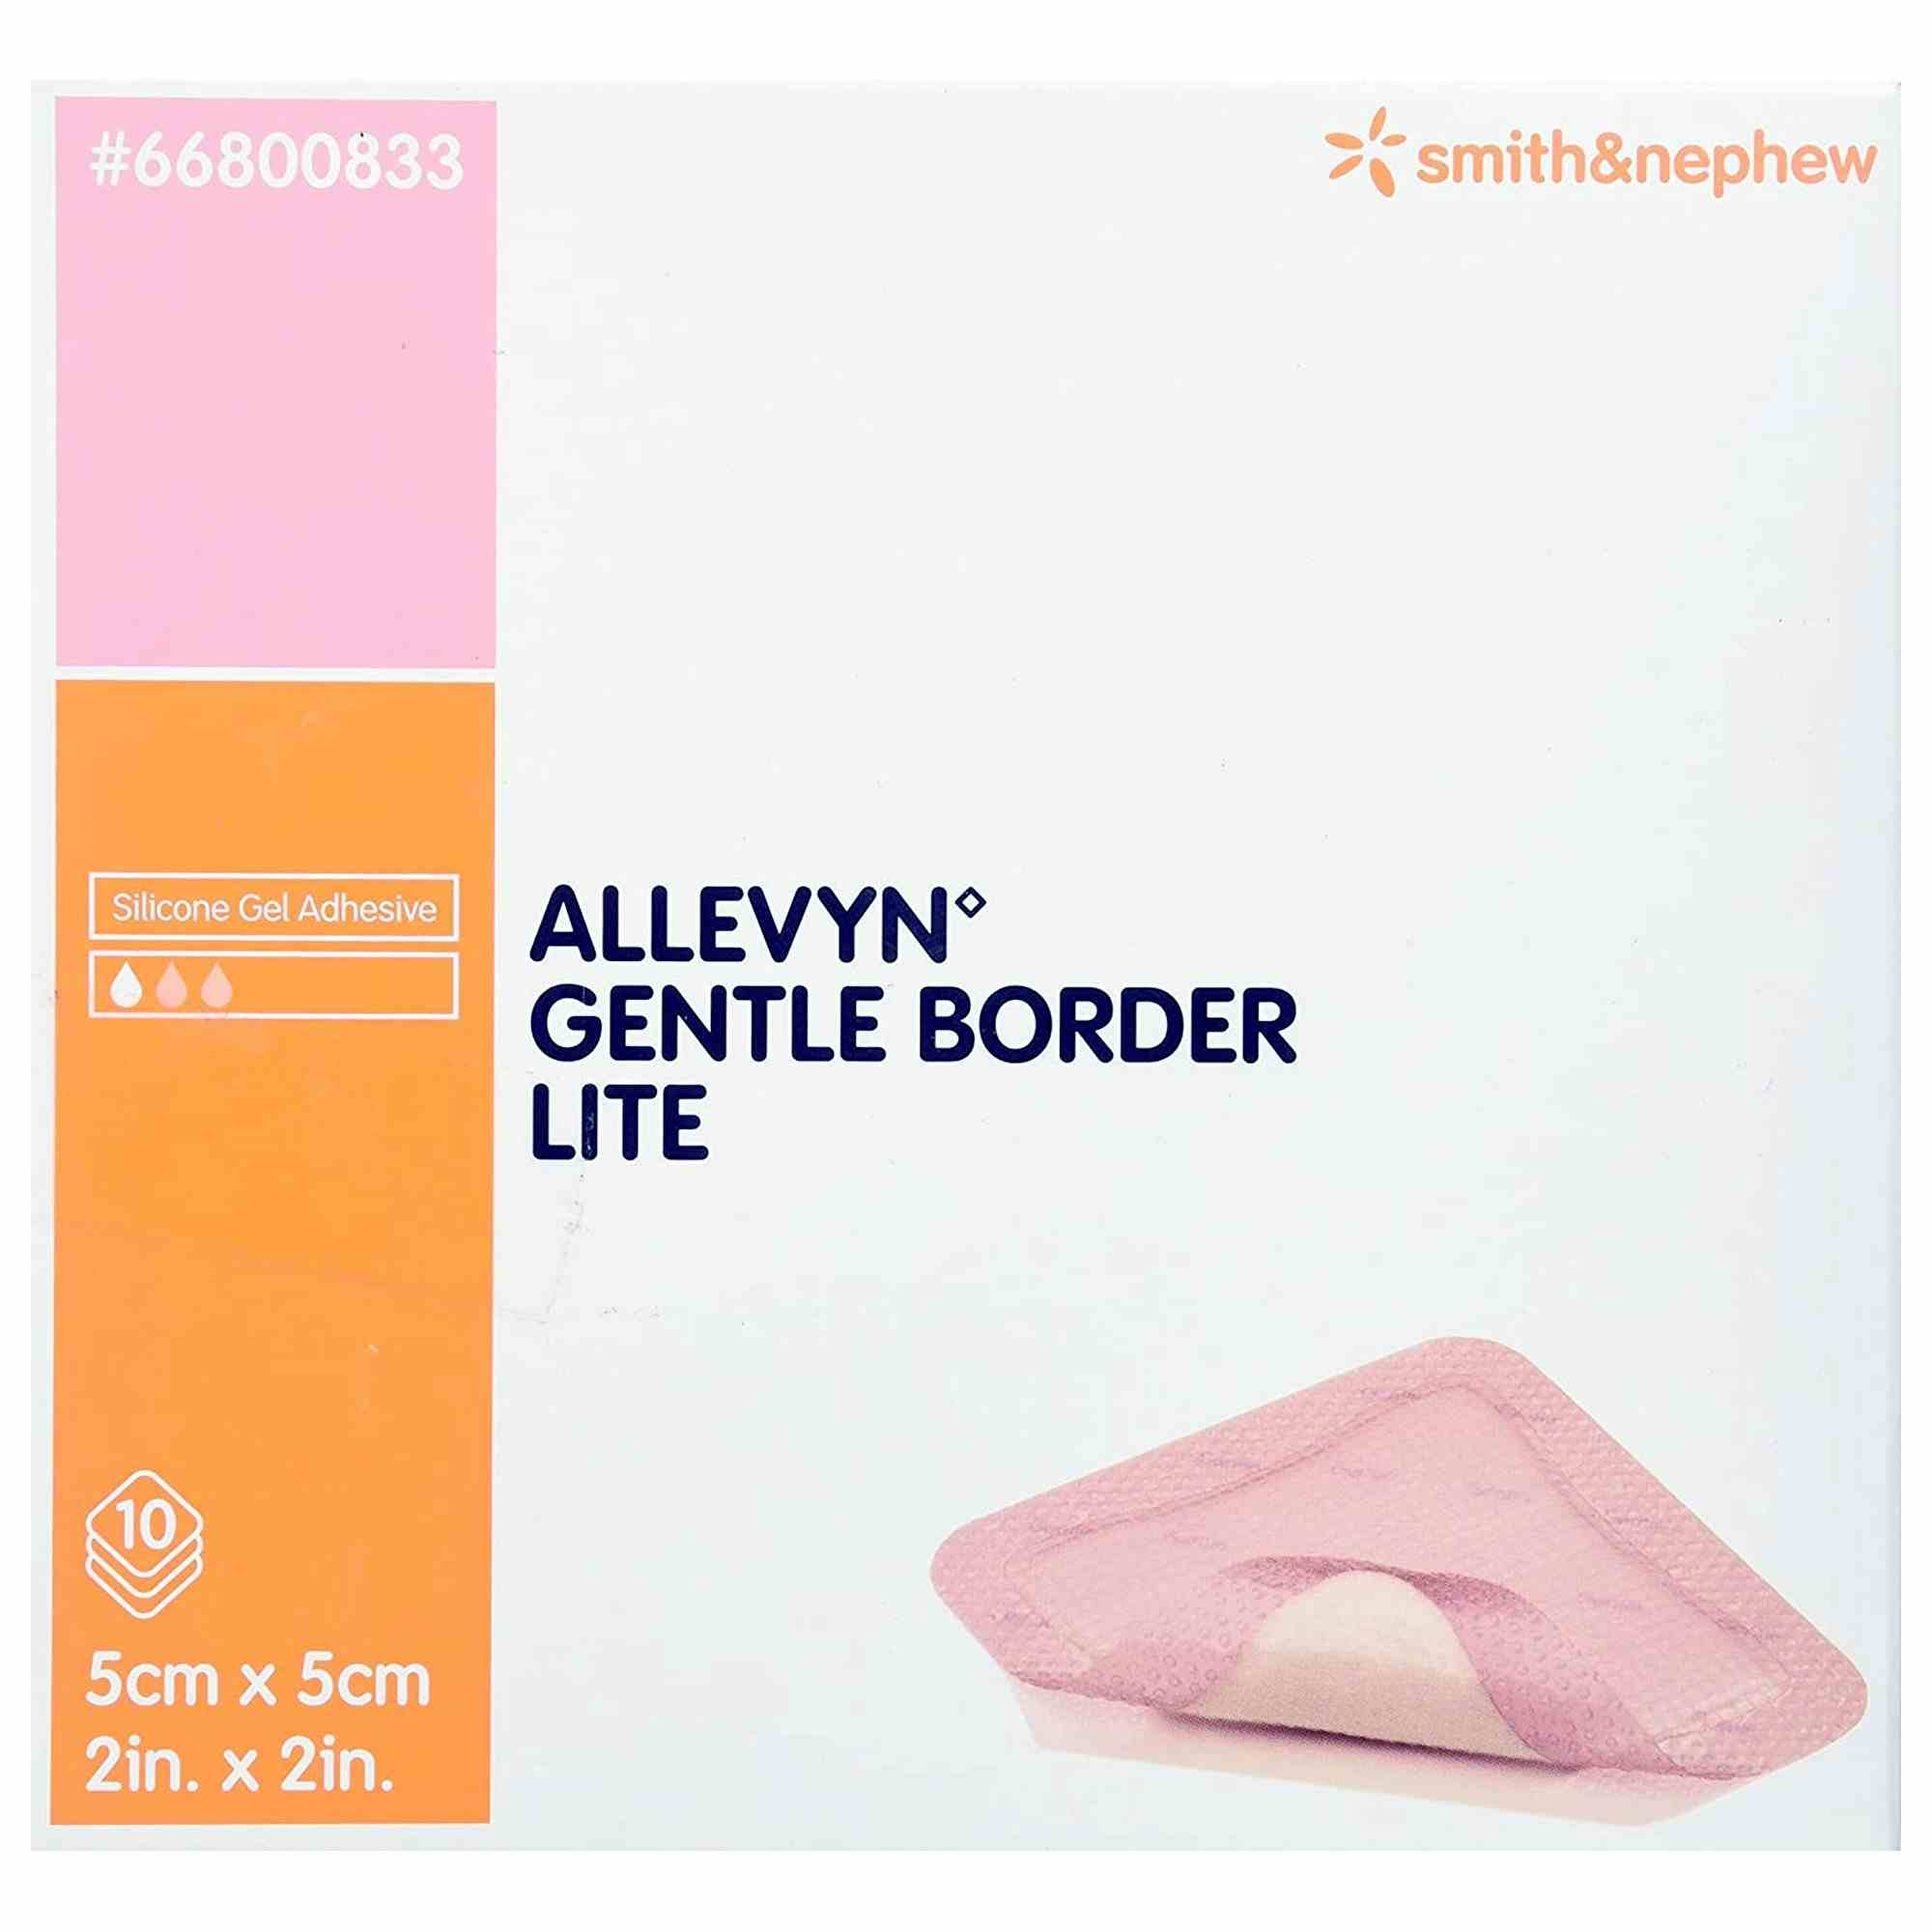 Allevyn Gentle Border Lite Silicone Gel Adhesive, 2" X 2", 66800833, Box of 10